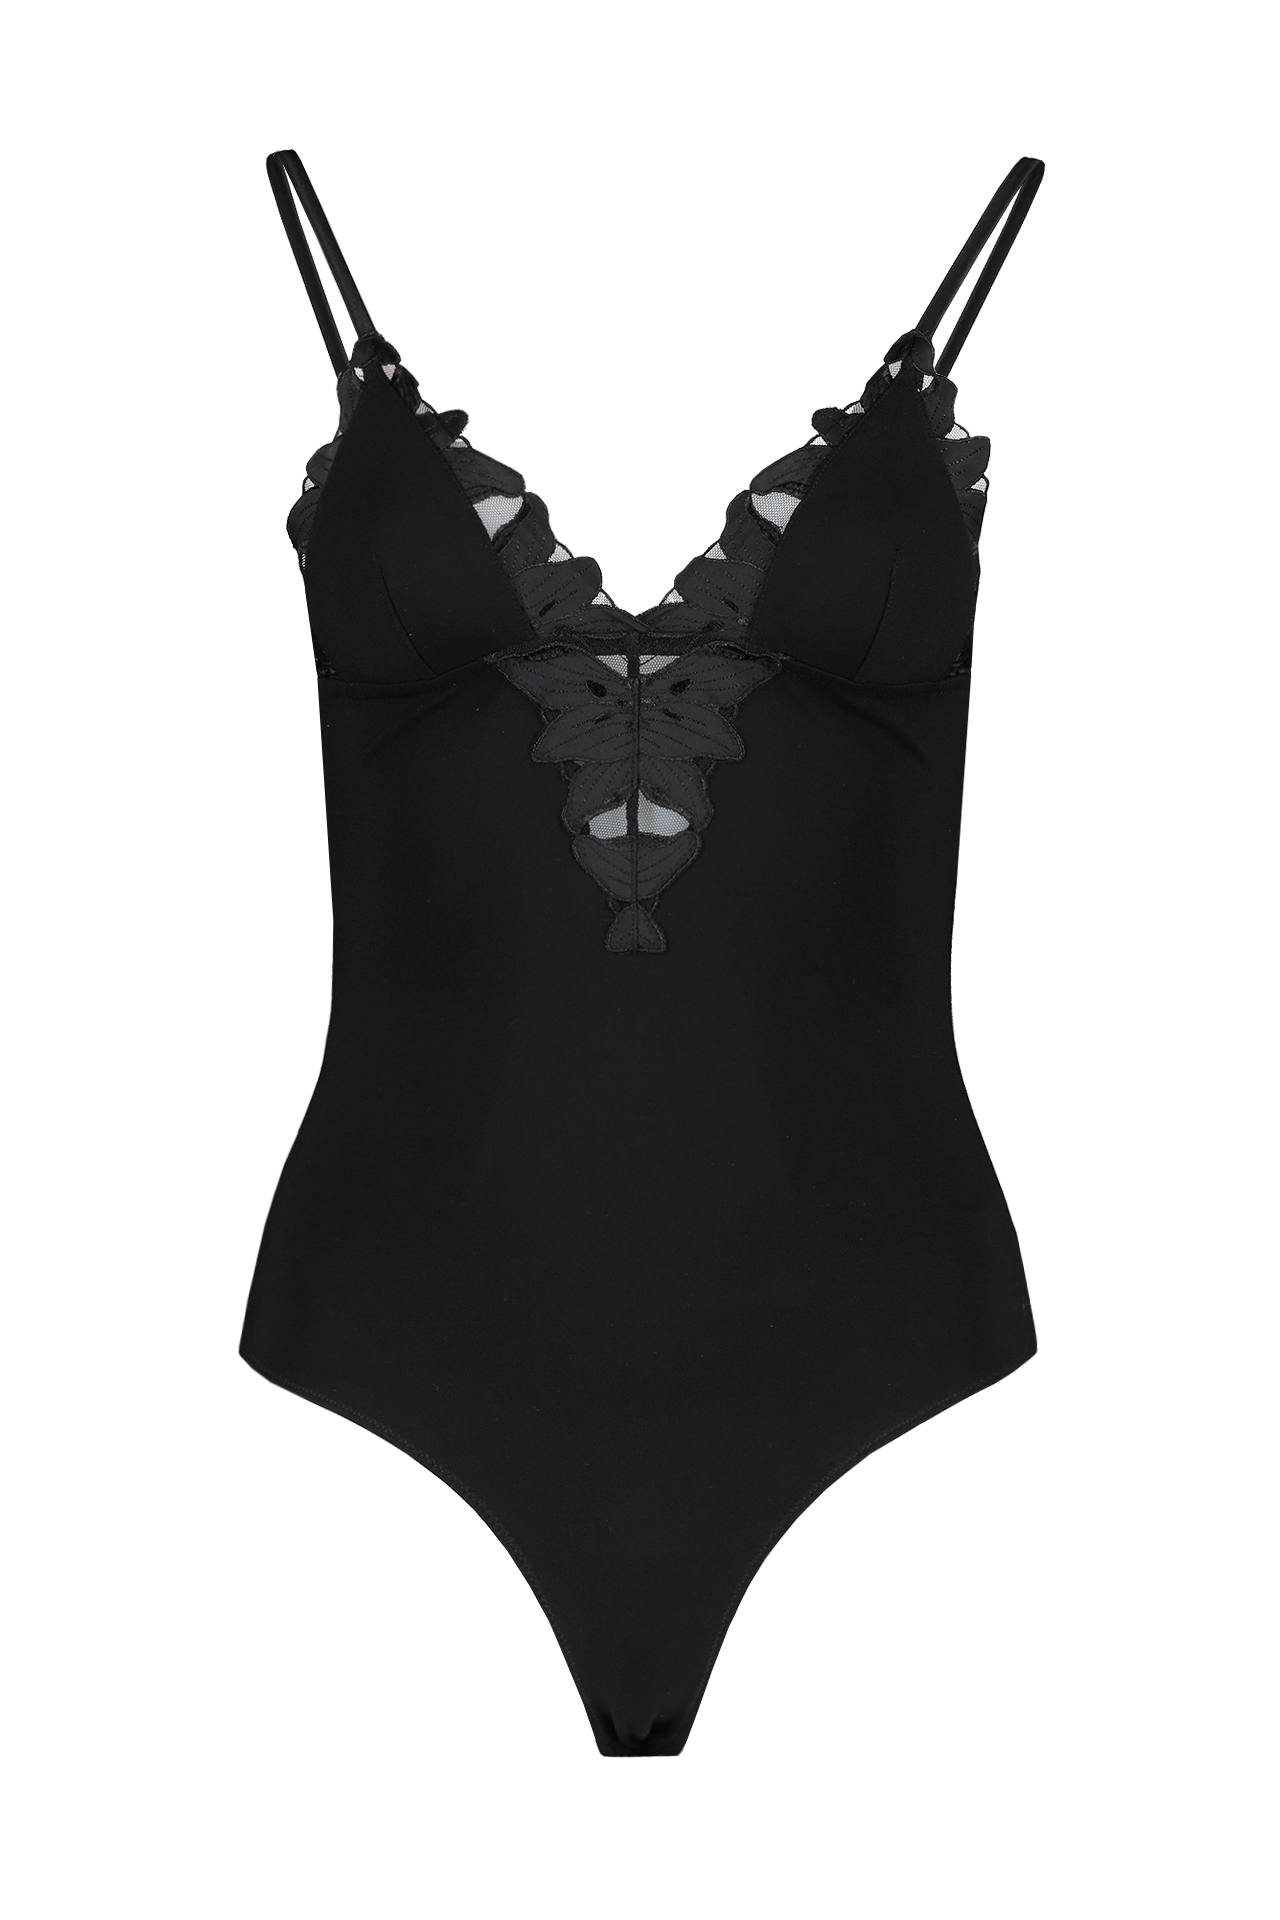 Fleur Du Mal Lily Lace V-Neck Bodysuit Black Front Mannequin Image (6614098935923)